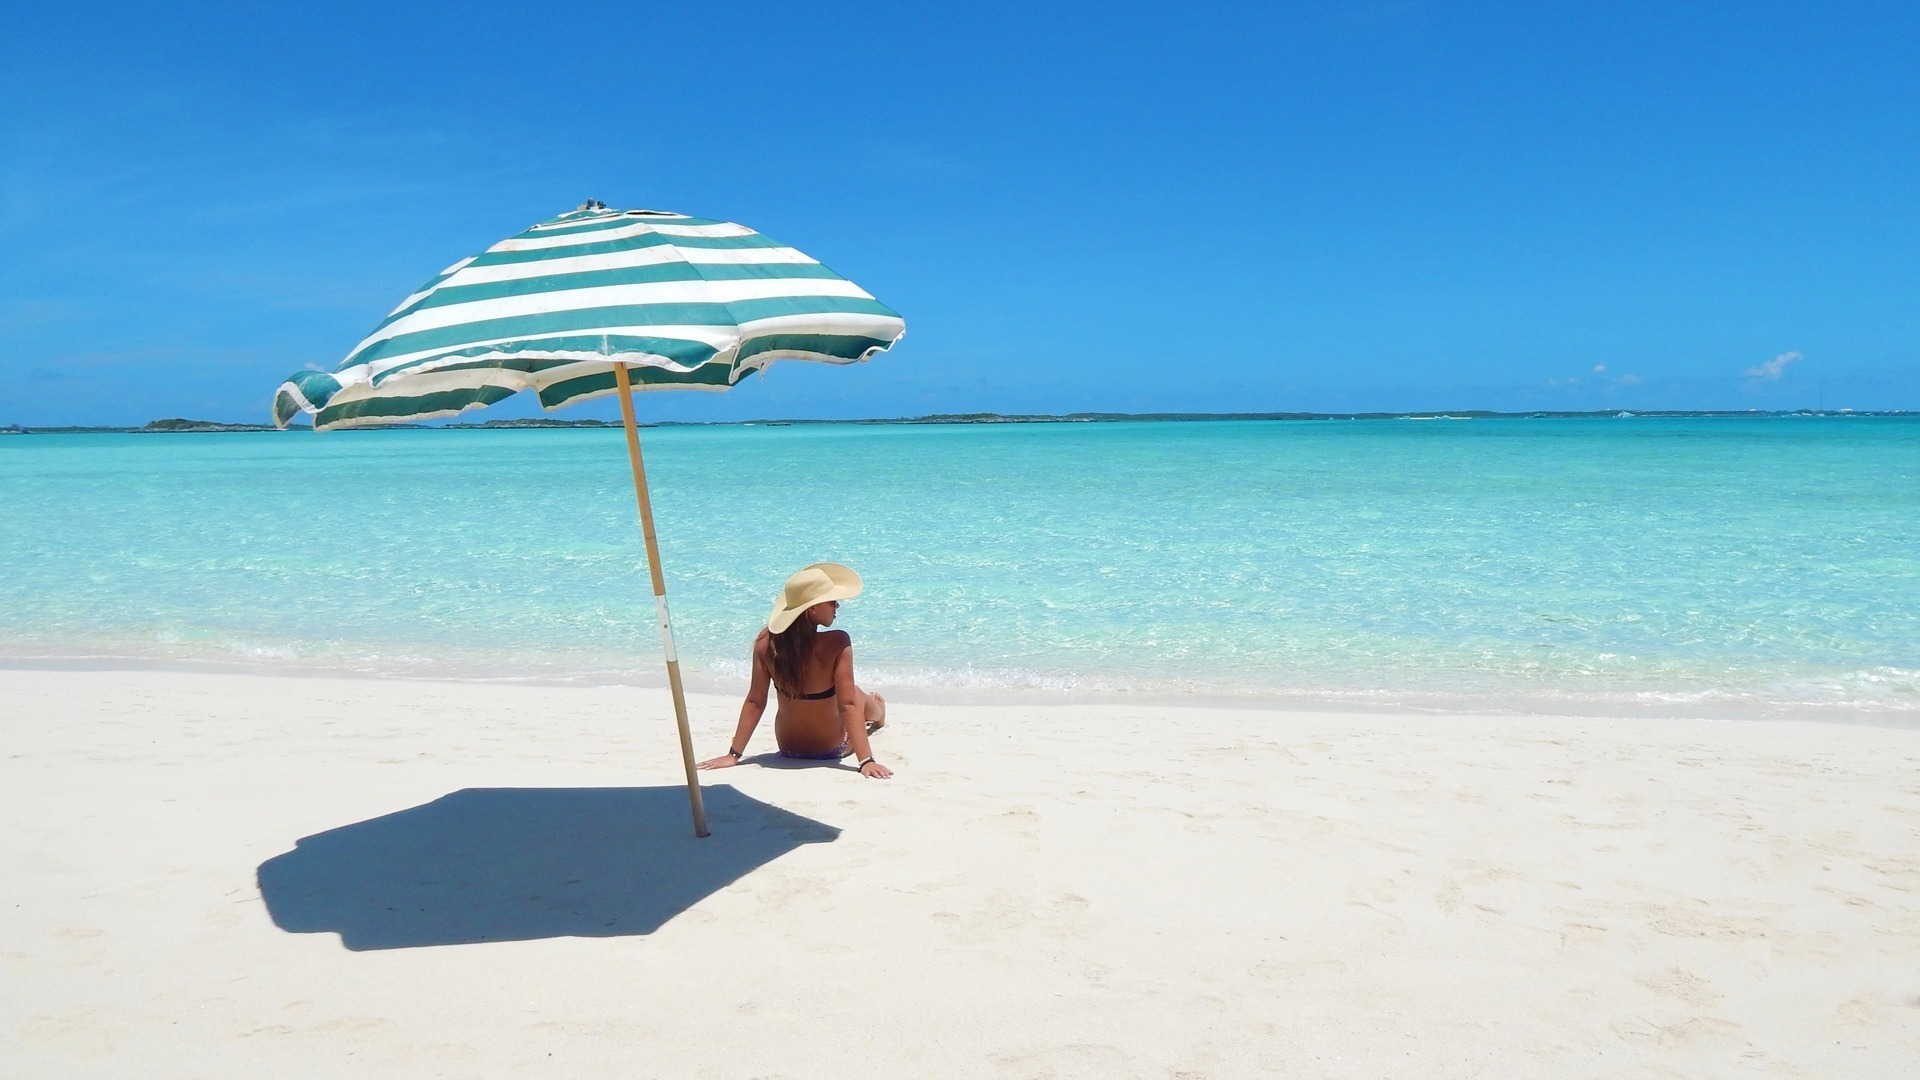 A woman sitting under an umbrella on a sandy beach at Staniel Cay.